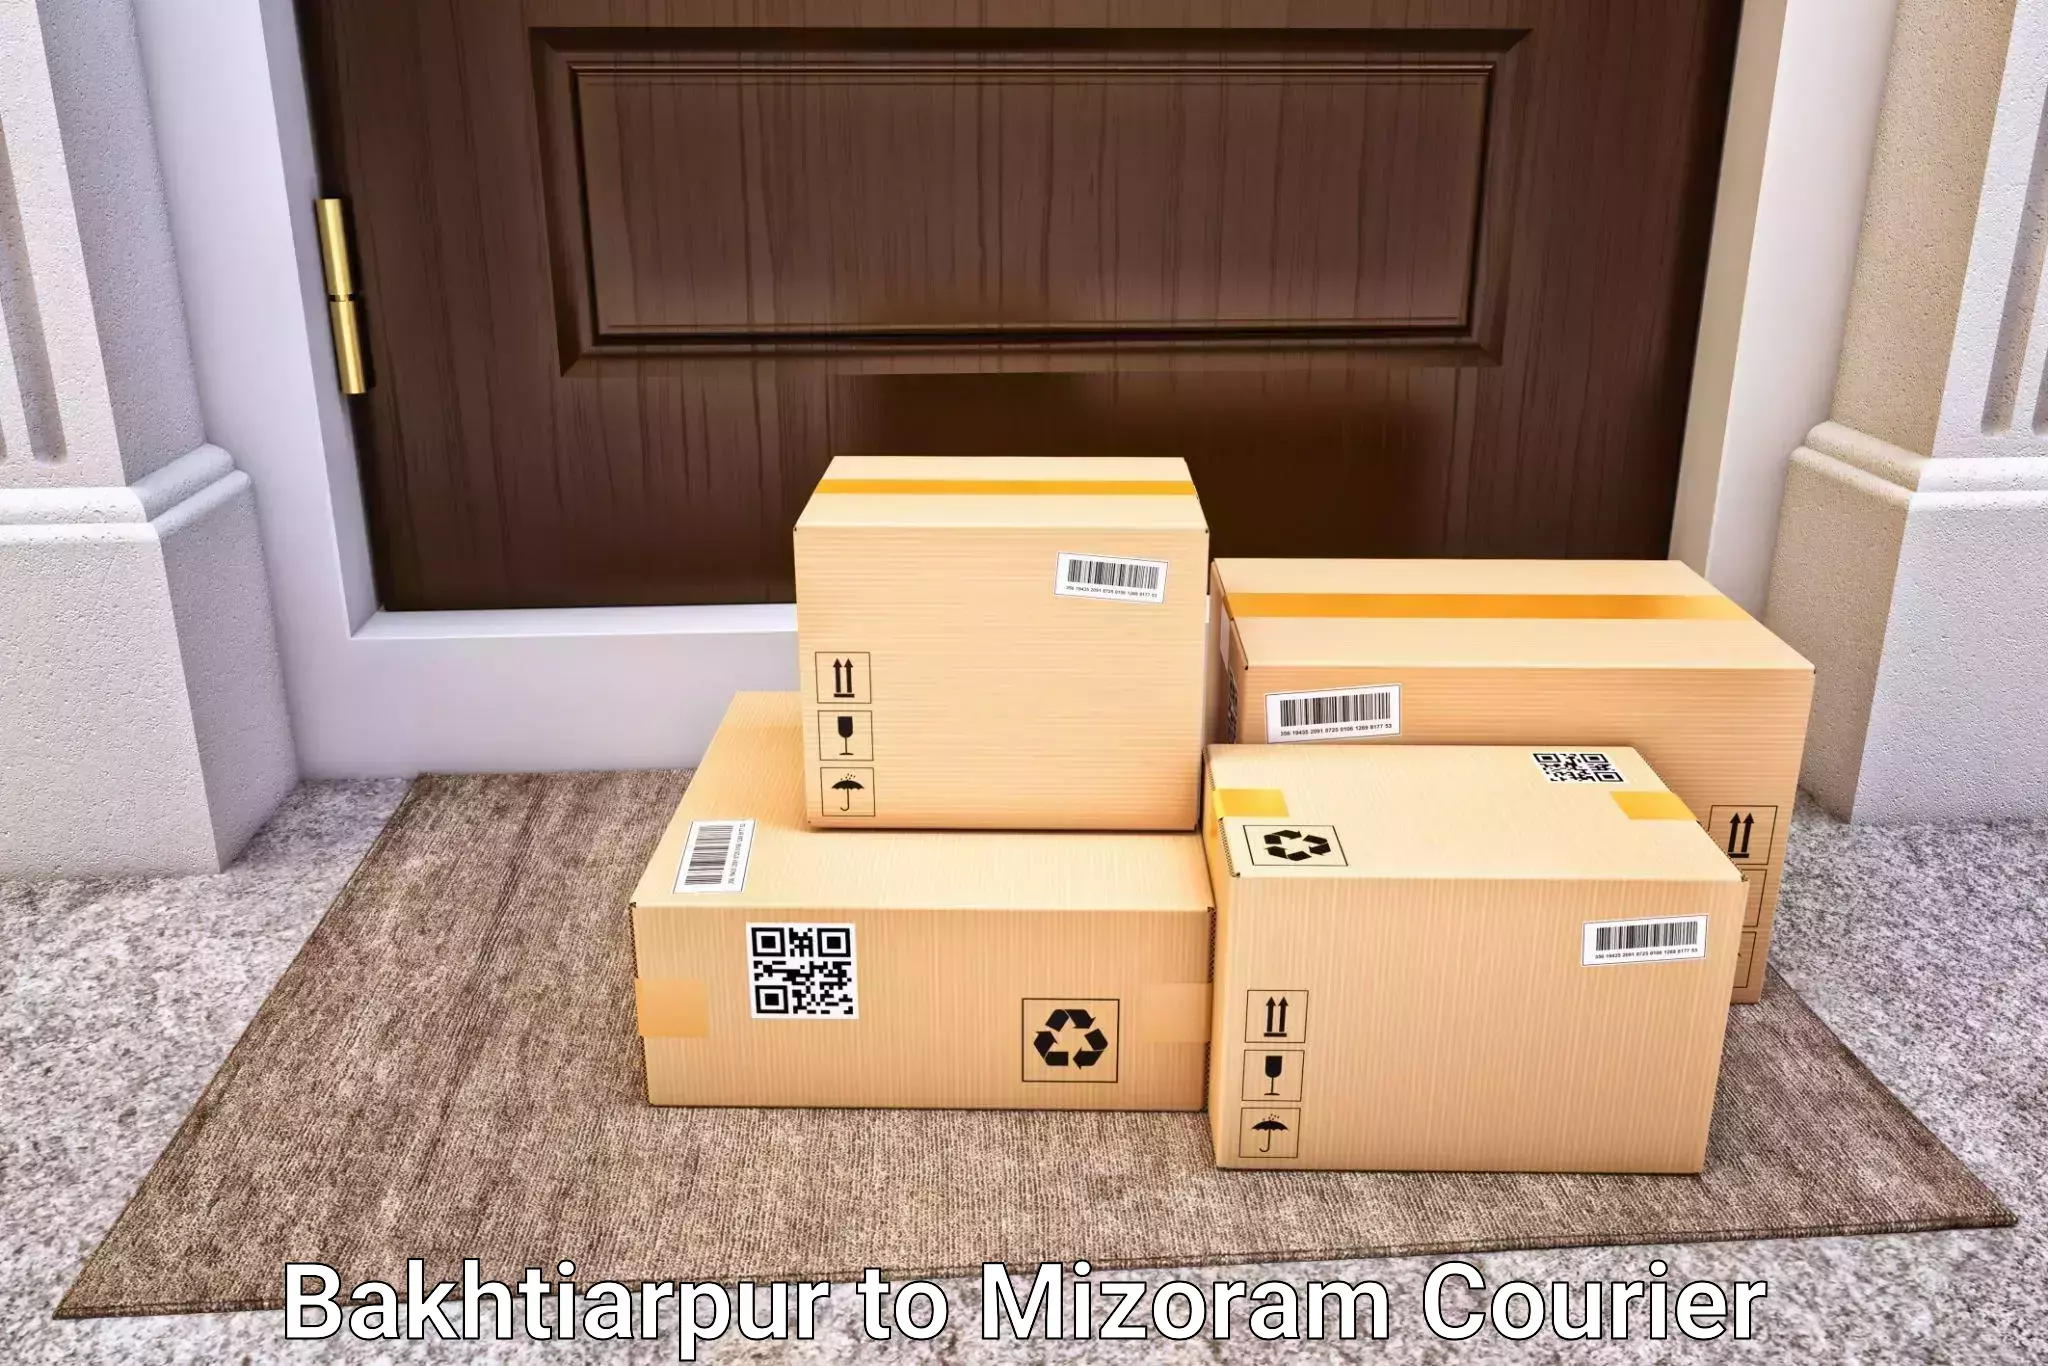 Hassle-free luggage shipping Bakhtiarpur to Mizoram